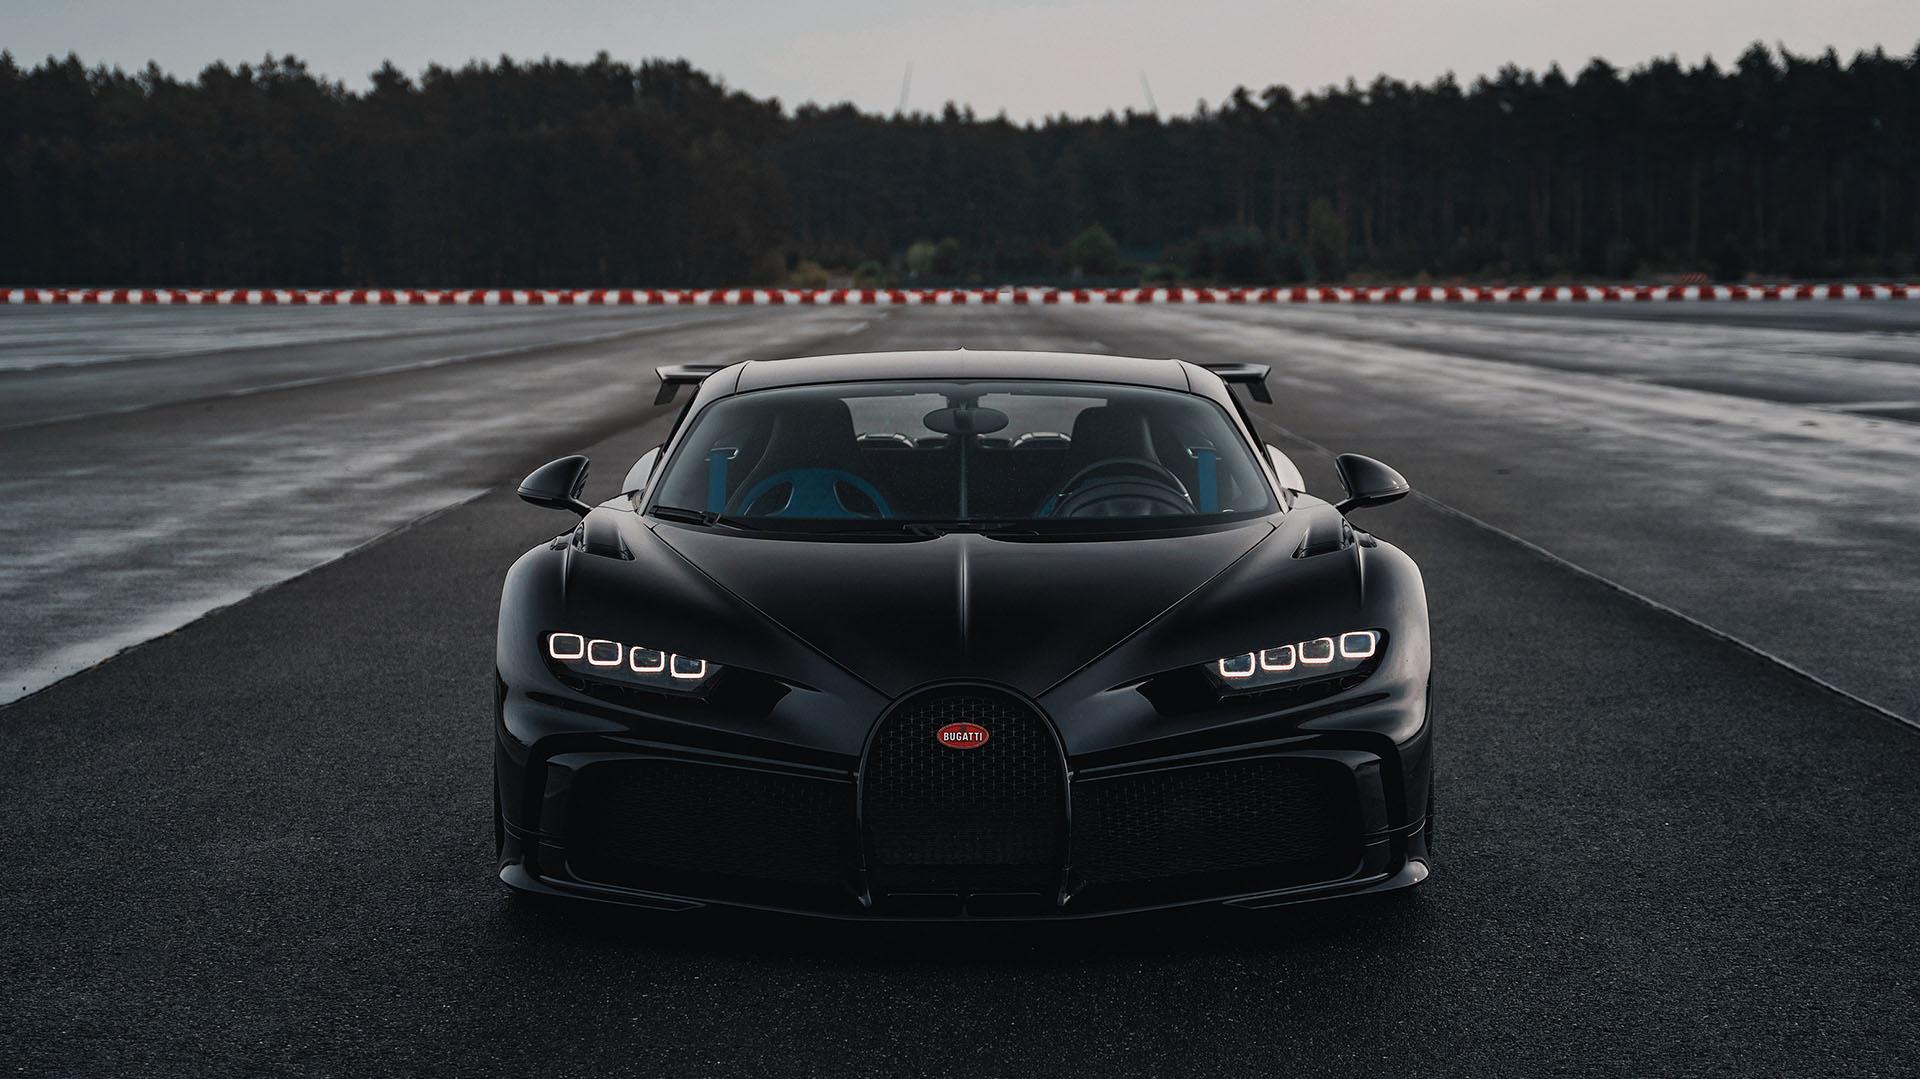 Desktop Wallpaper Black Bugatti Chiron 2020 Black Car Hd Image Picture  Background 77993c